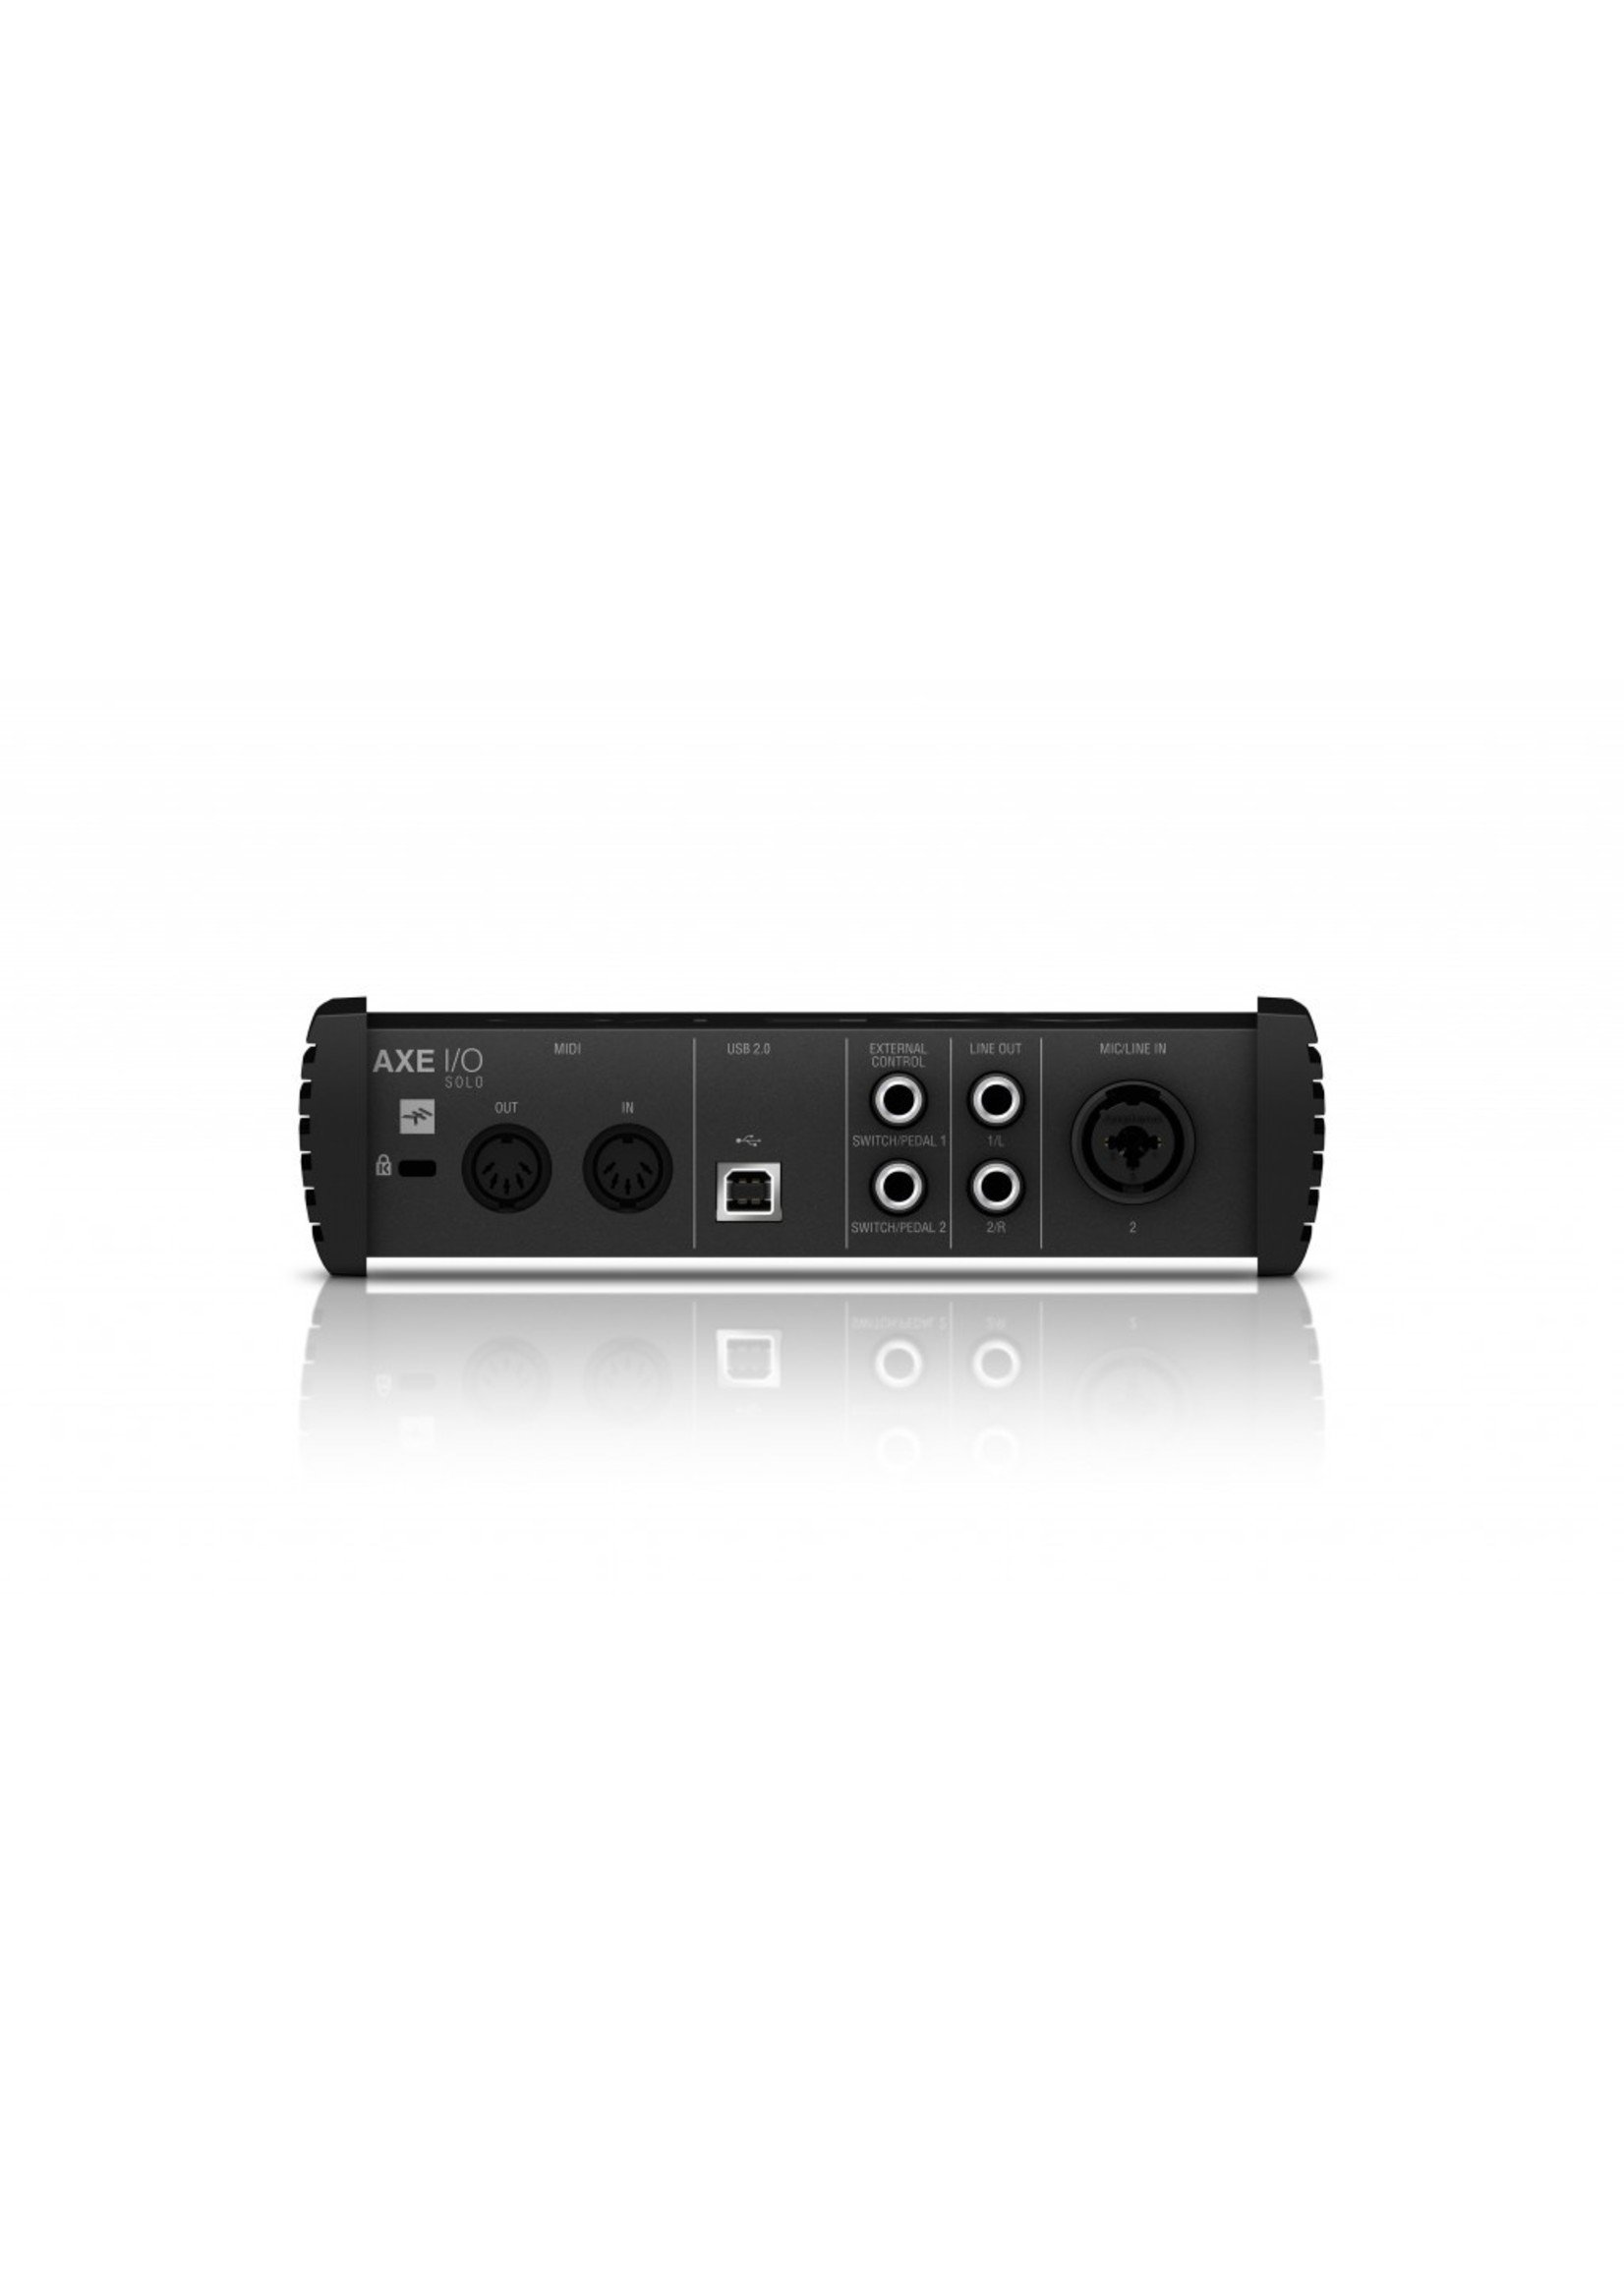 IK Multimedia Axe I/O Solo Compact Audio Interface